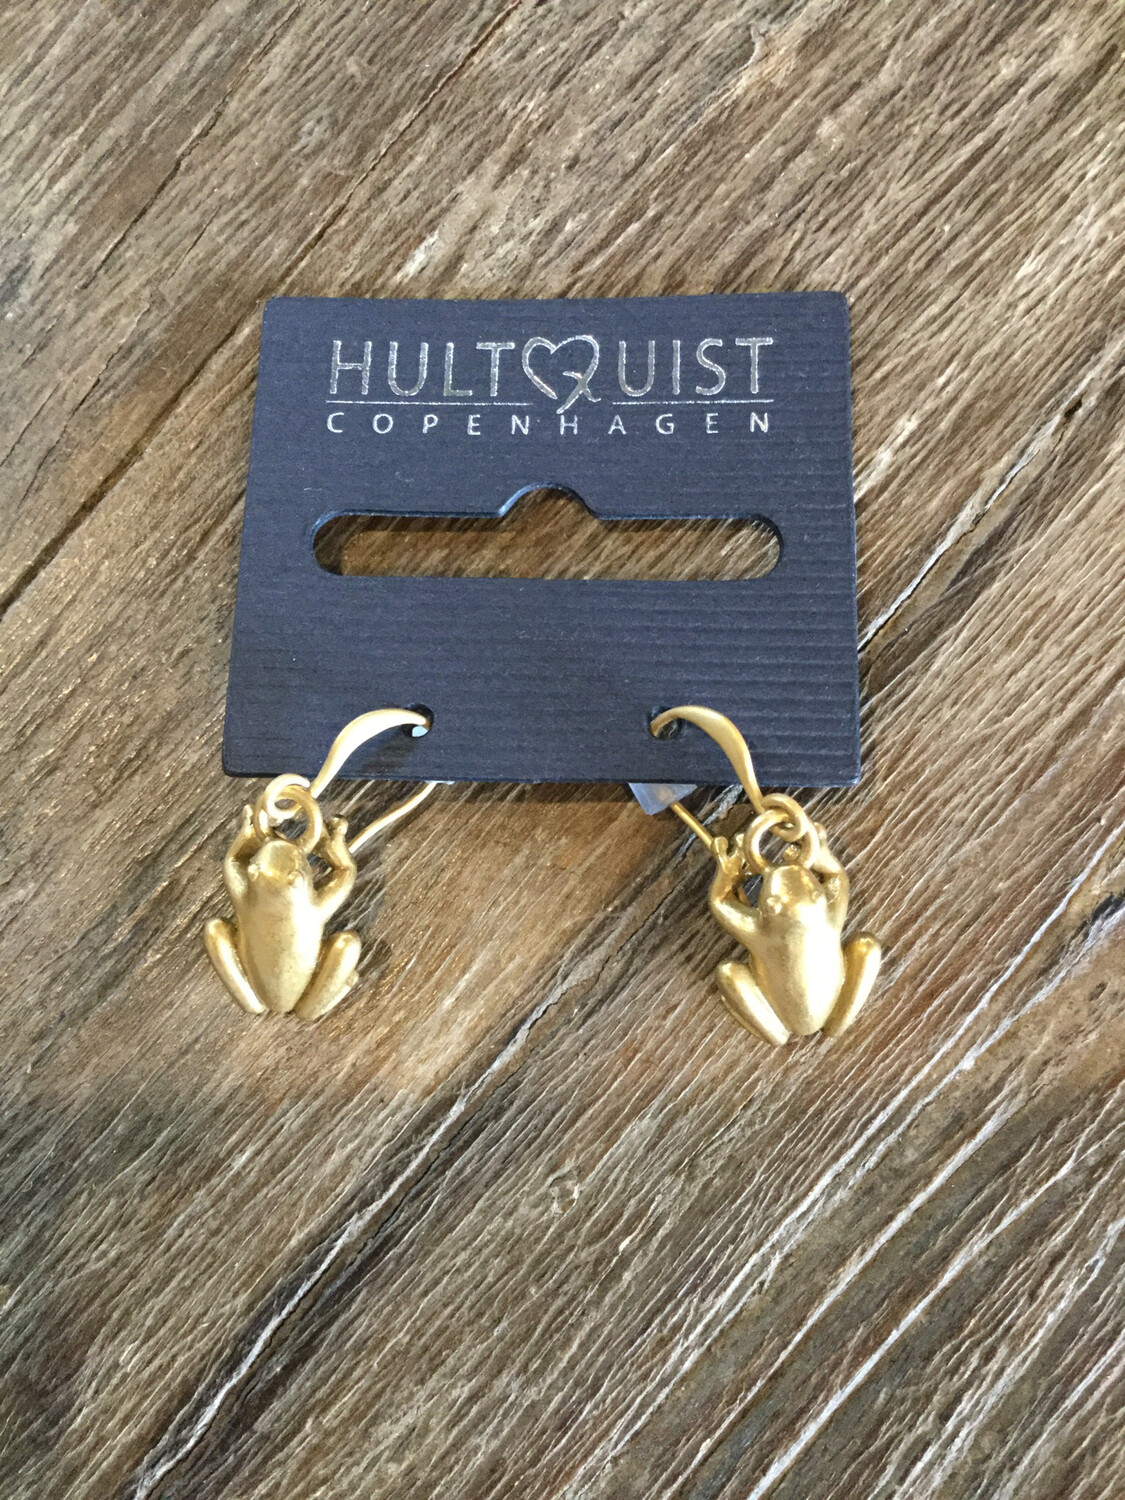 Hultquist Copenhagen Frog Earrings Gold Fill